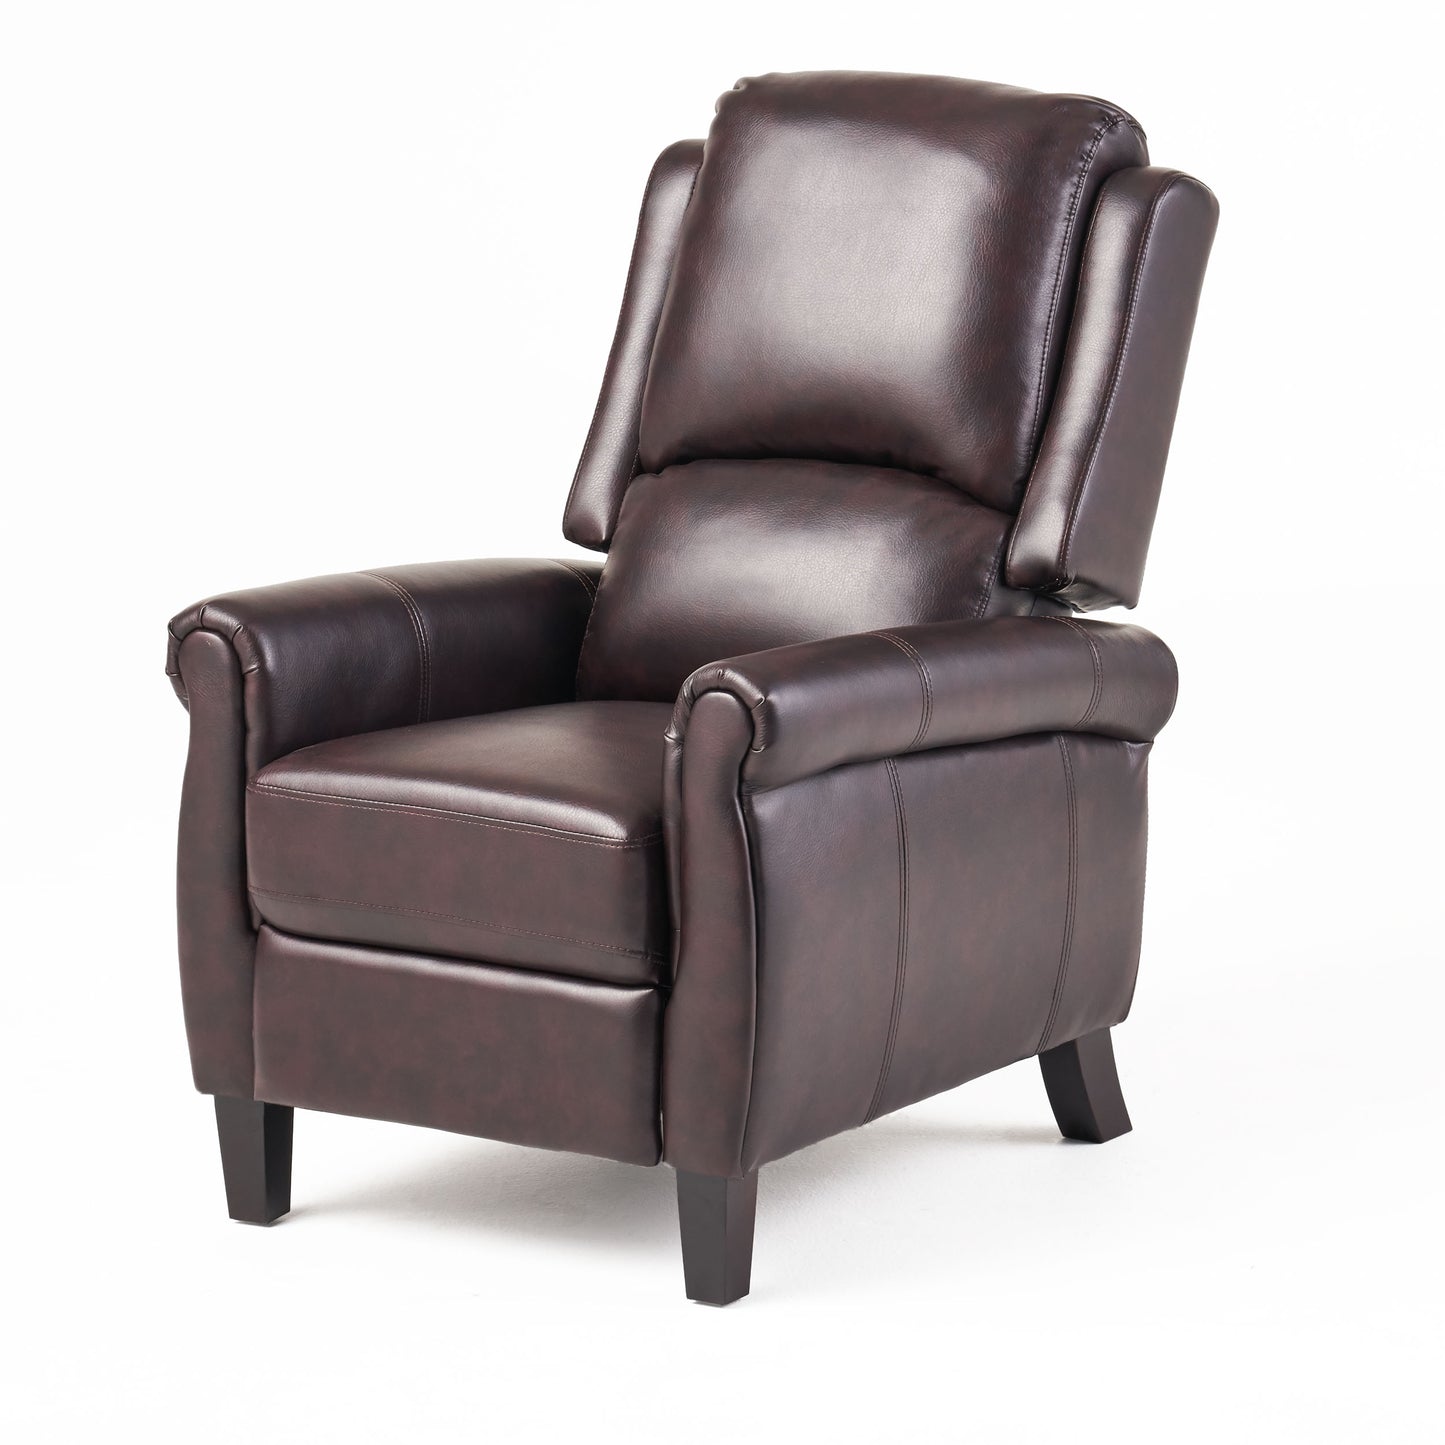 Memphis PU Leather Recliner Club Chair